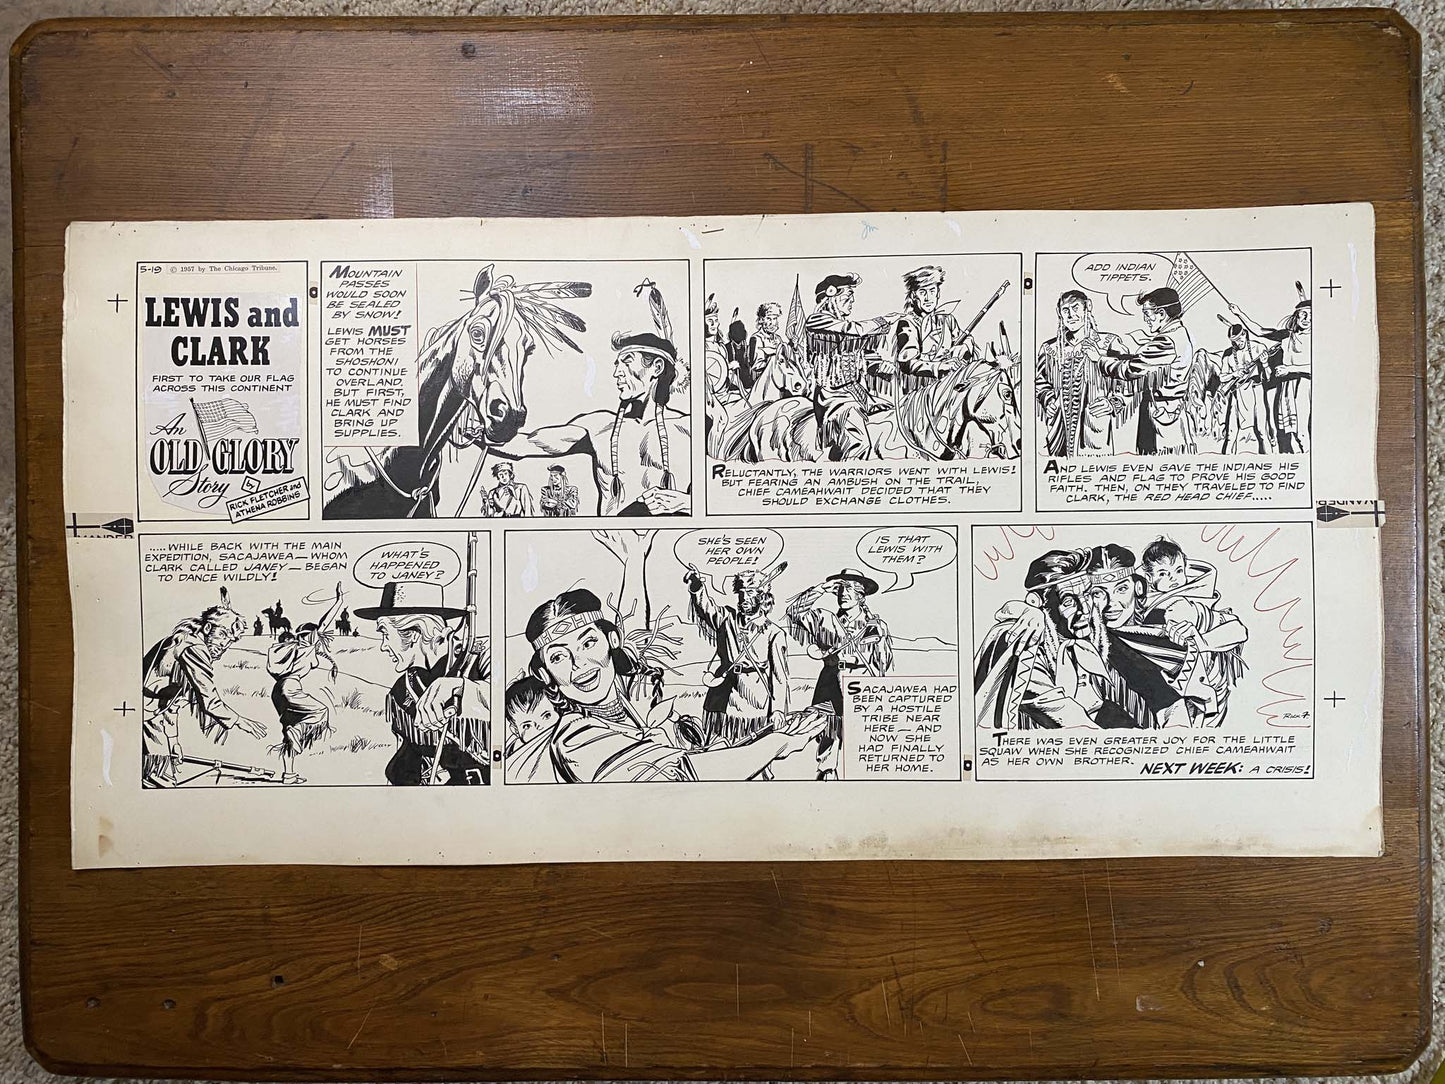 Lewis and Clark: An Old Glory Story 5/19/57 Original Art Illustration | Fletcher Studio